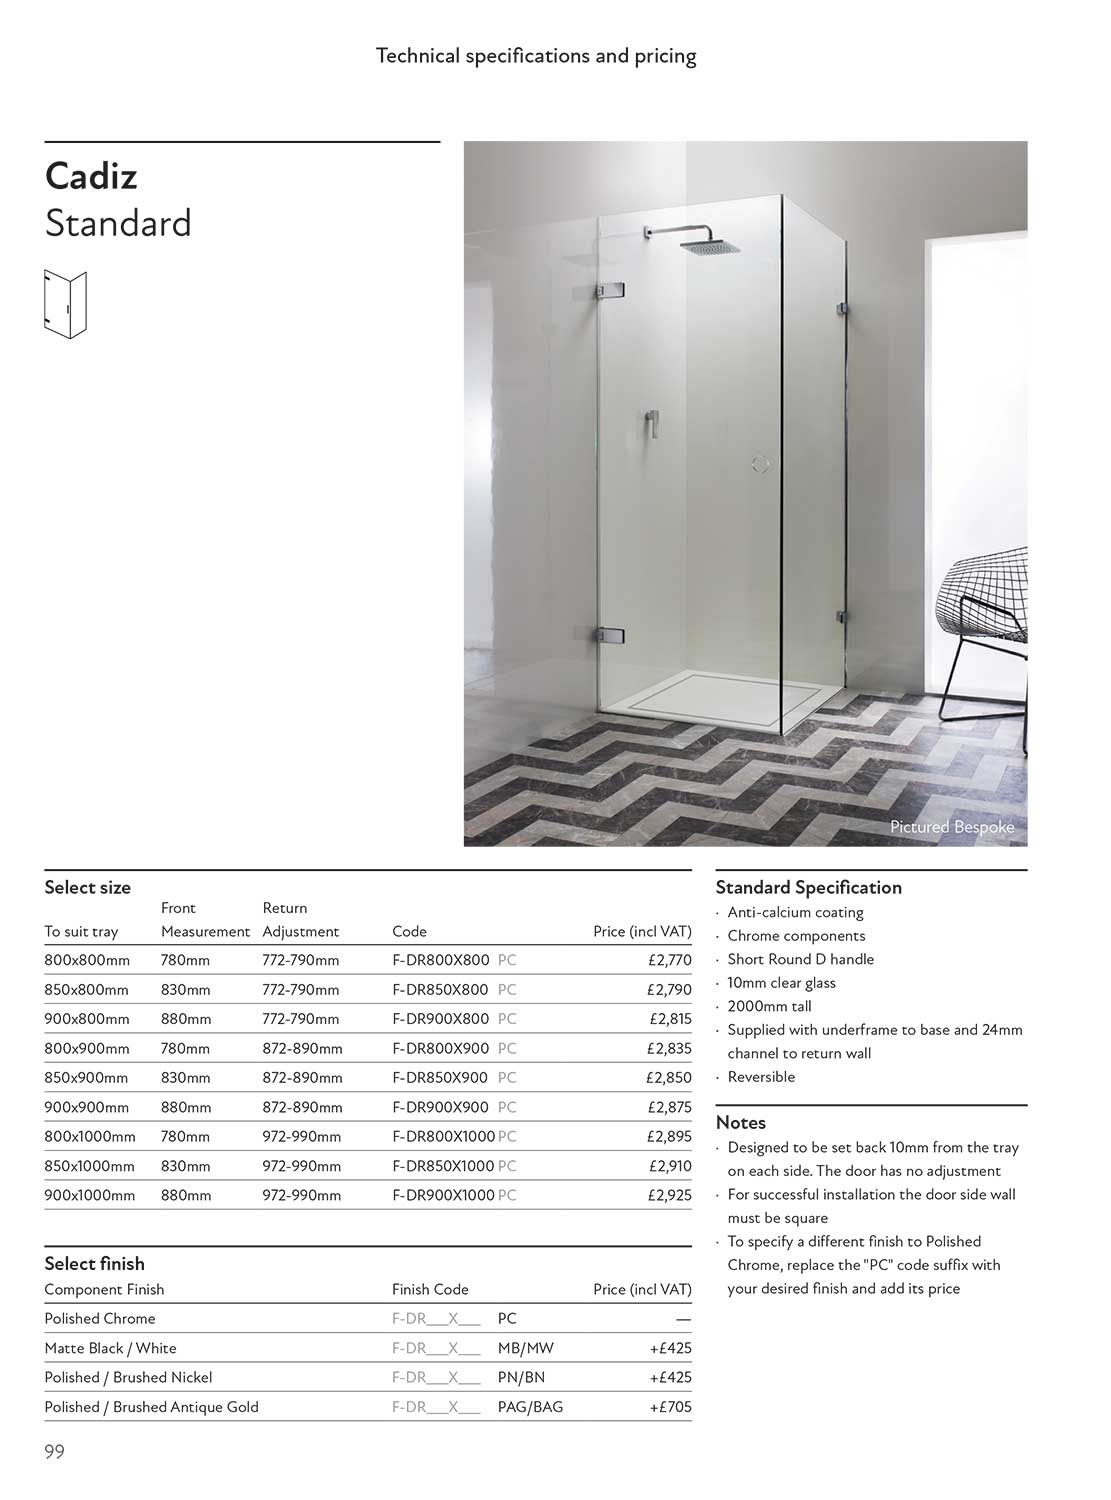 Cadiz Standard brochure page